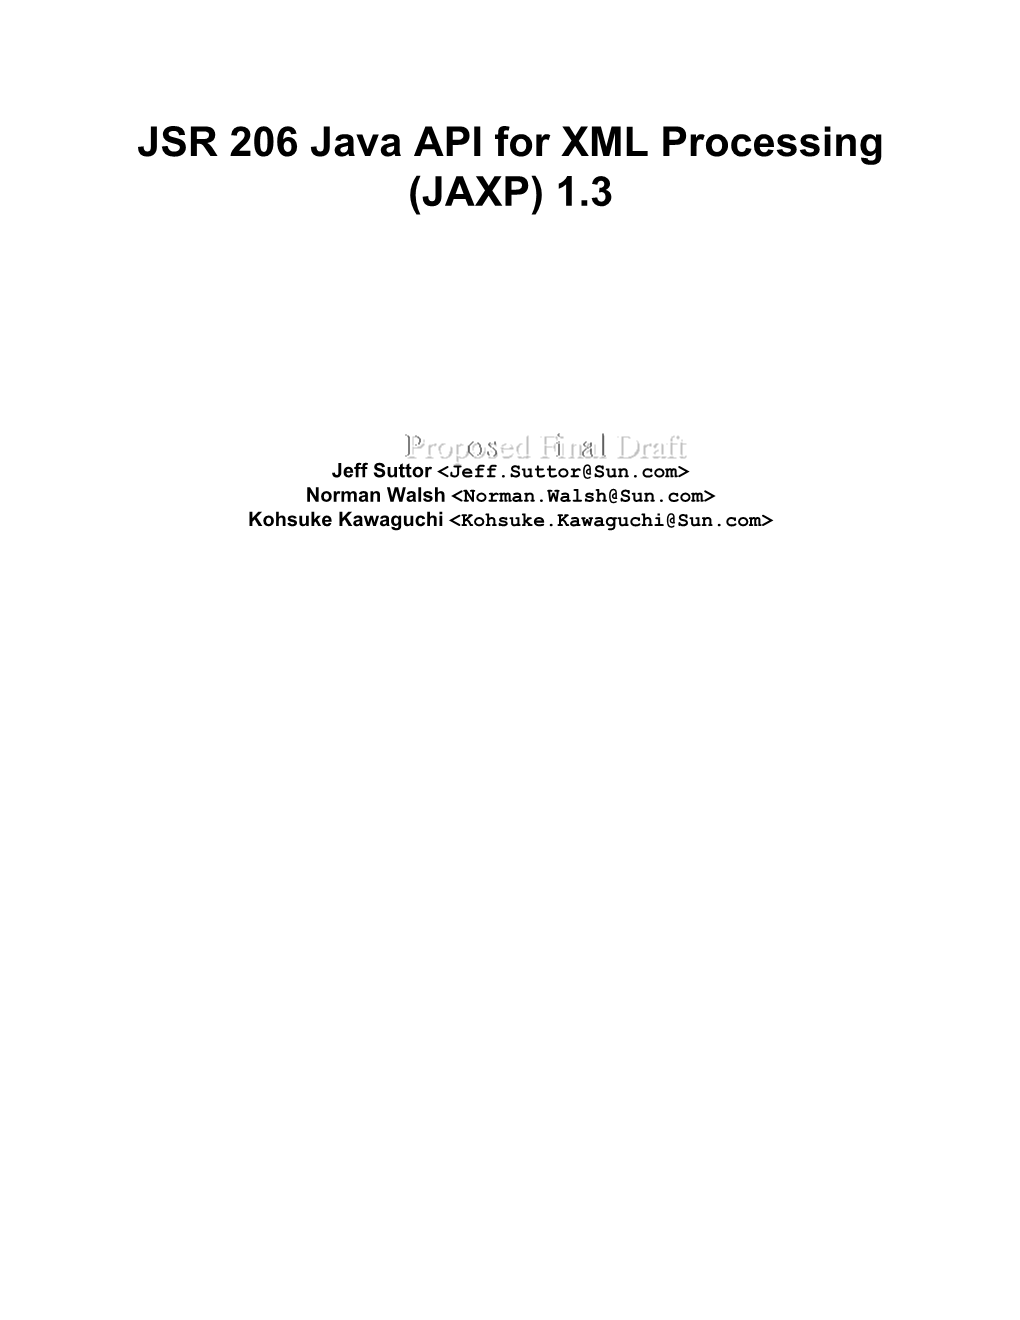 JSR 206 Java API for XML Processing (JAXP) 1.3